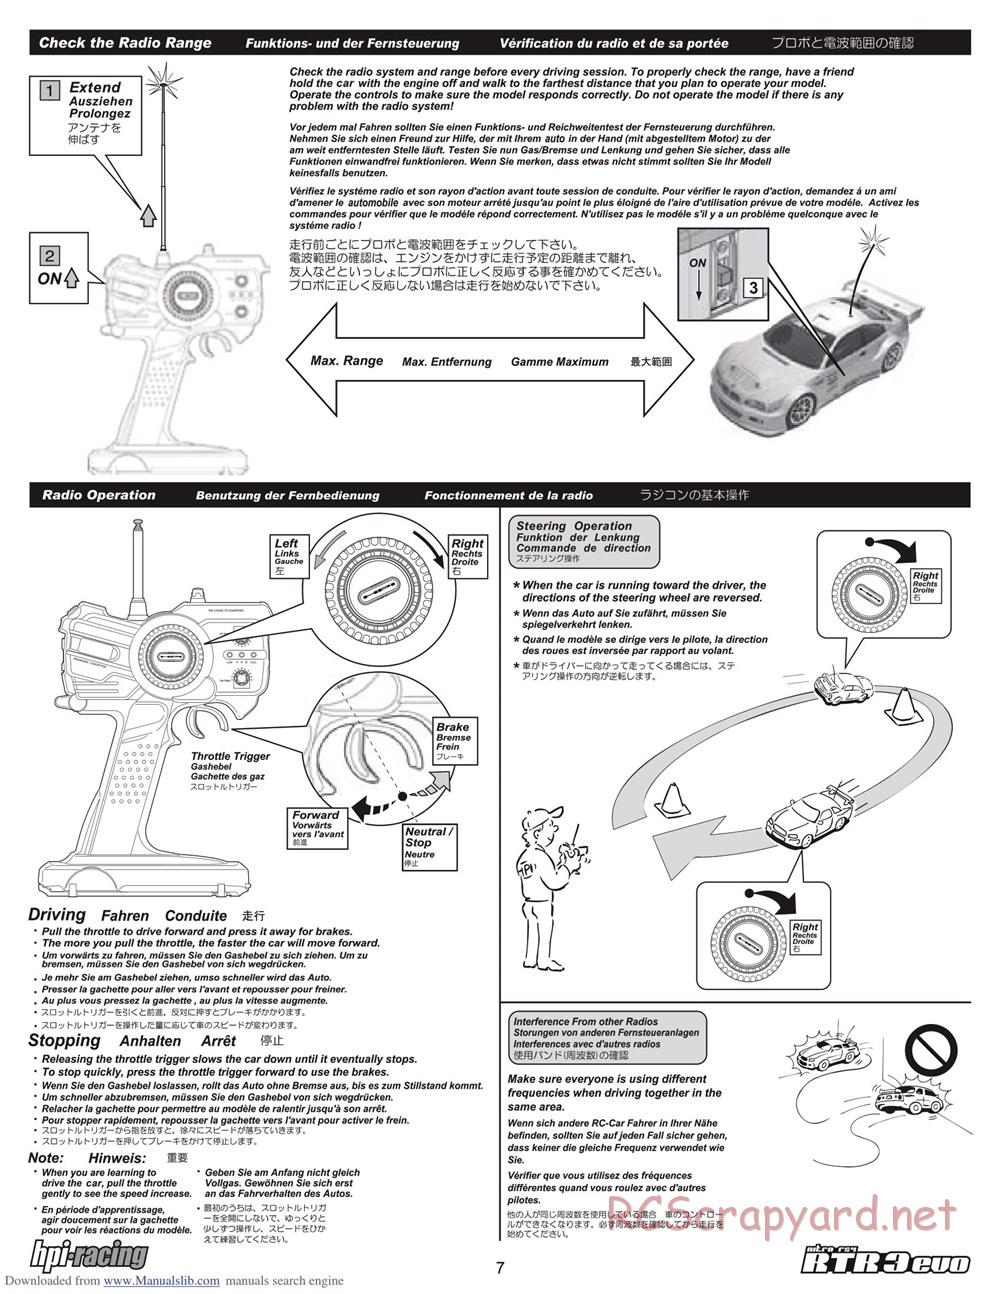 HPI - Nitro RS4 3 Evo - Manual - Page 7